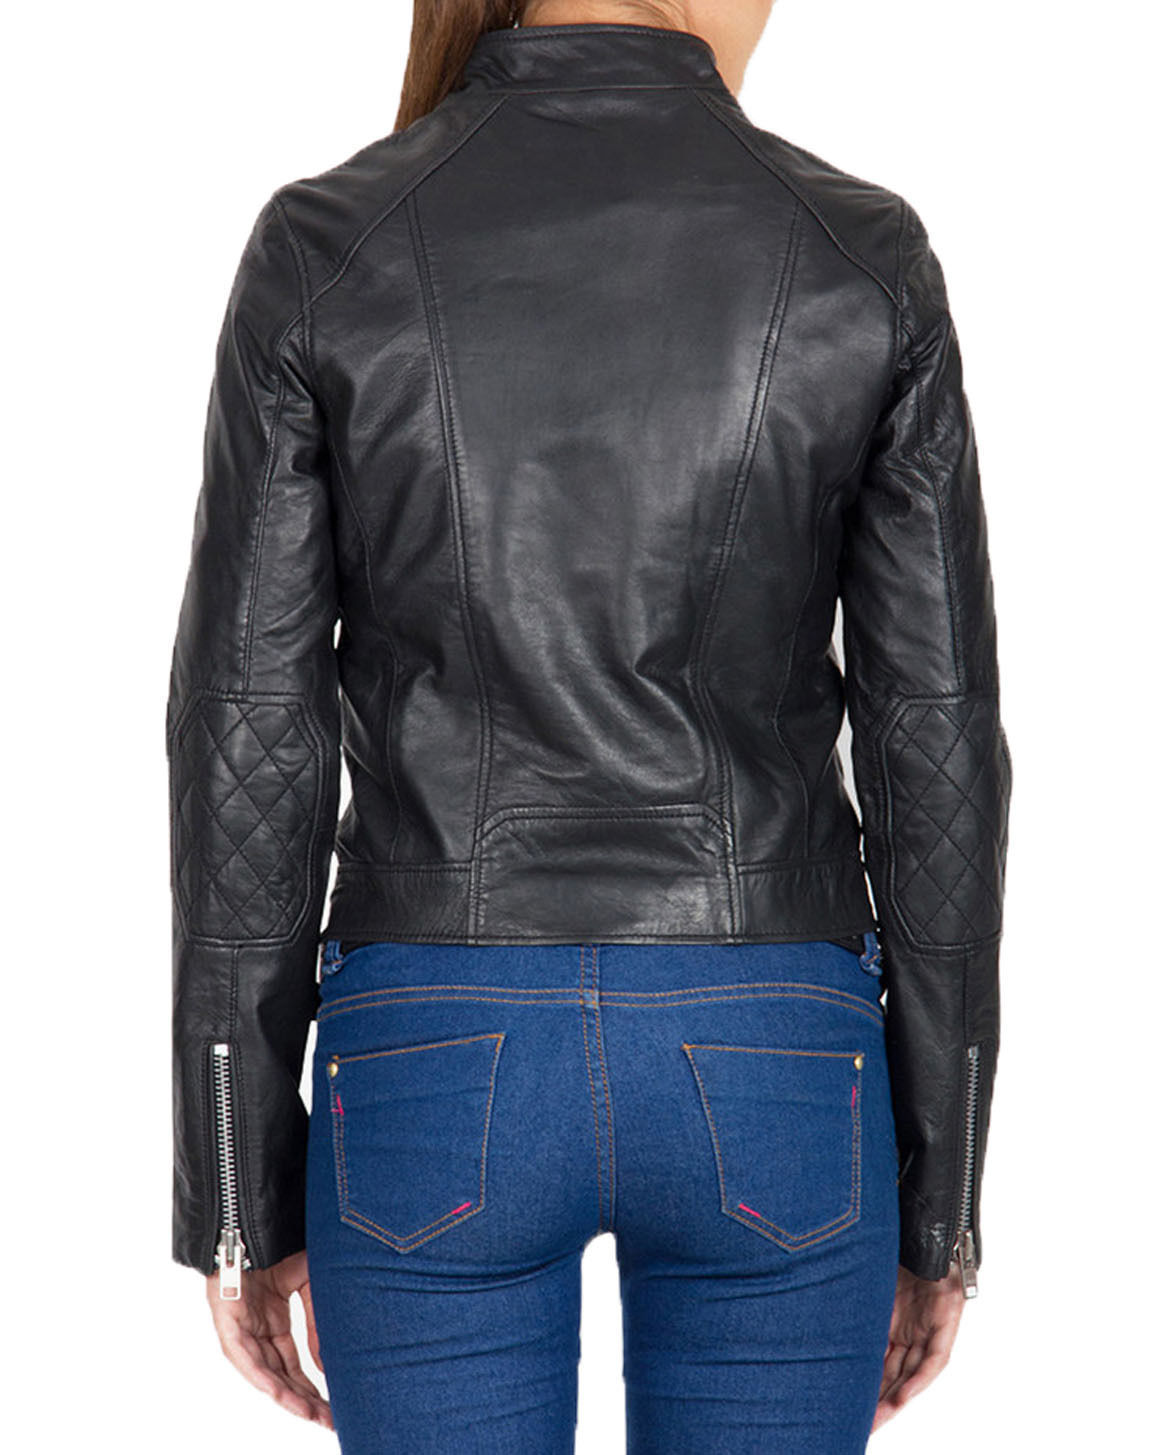 New Women's Black Fashion Motorcycle Original Leather Slim fit Jacket ...